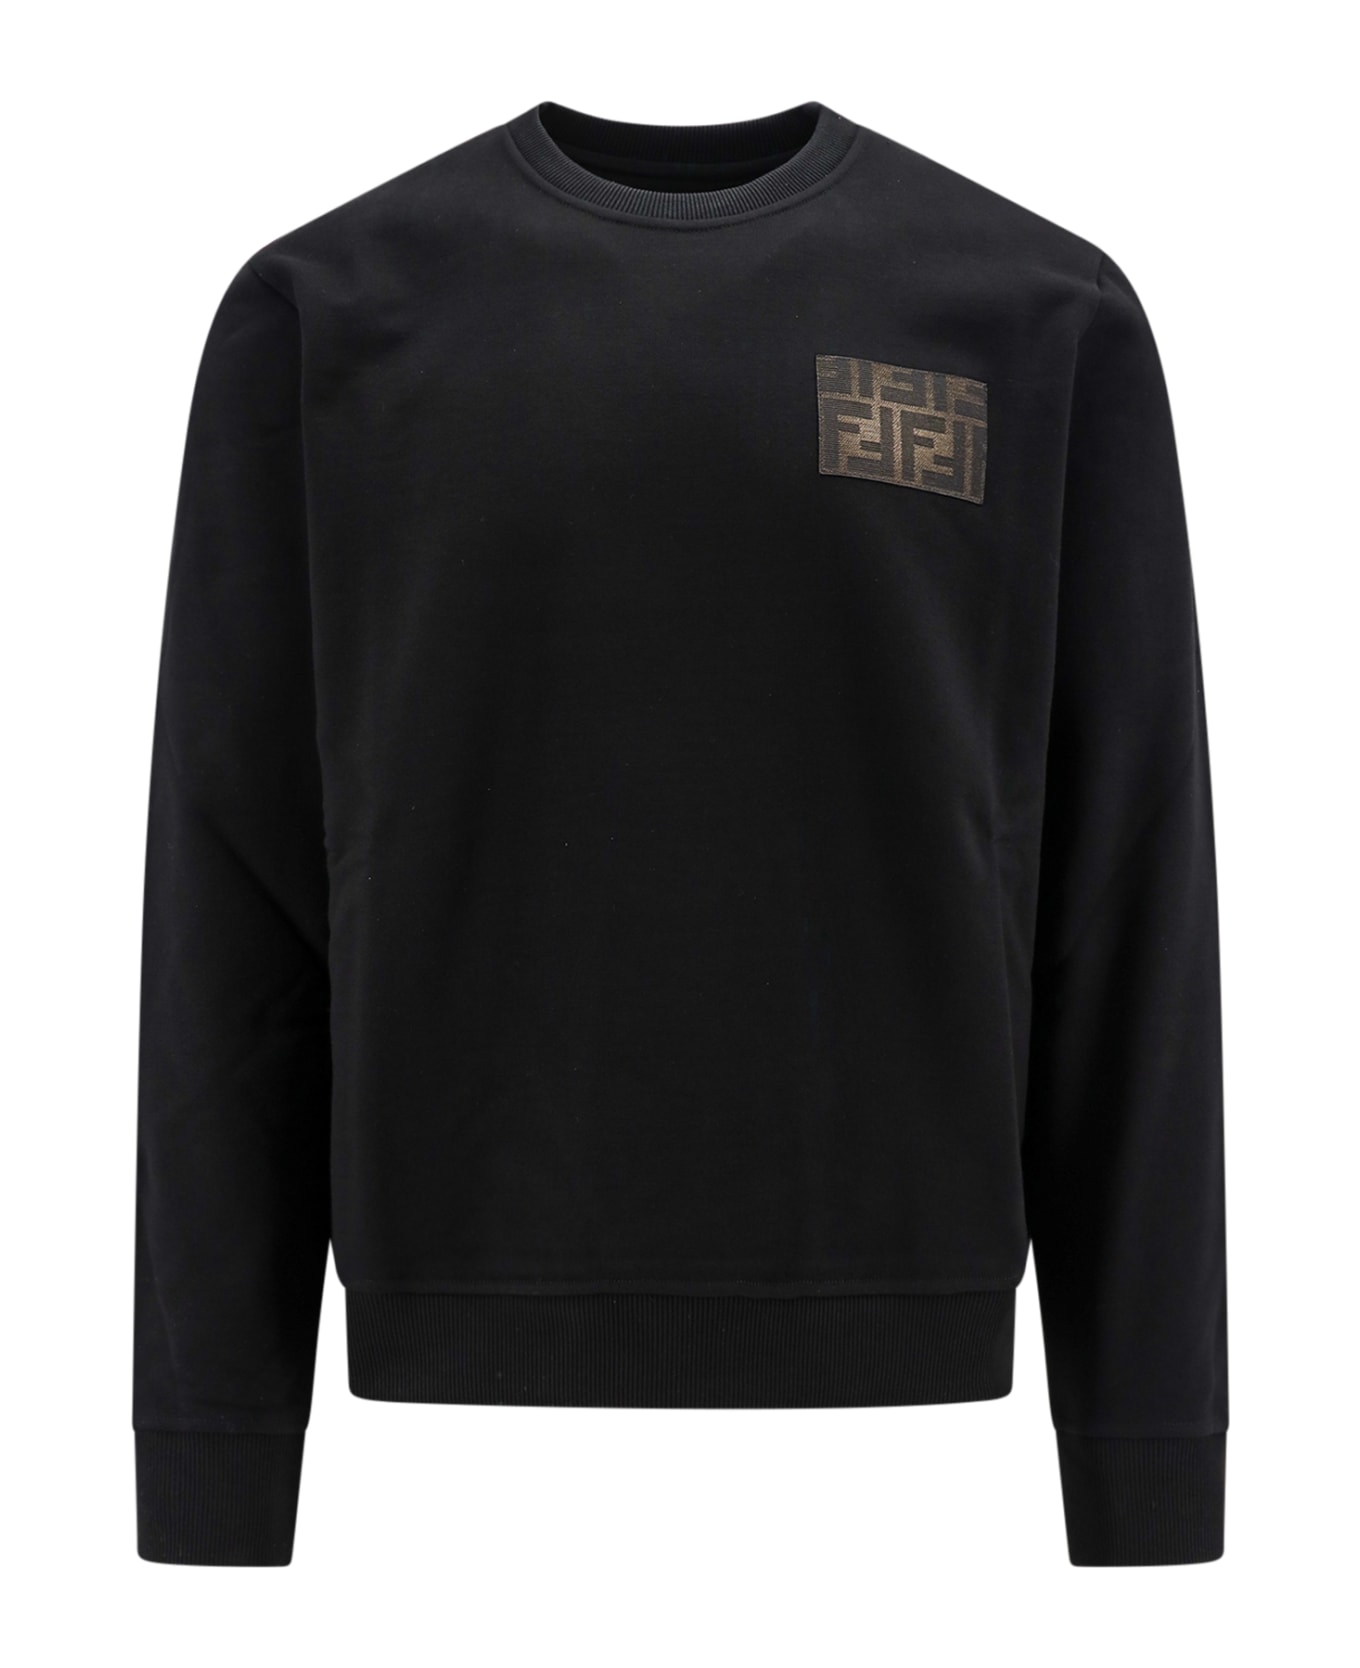 Fendi Cotton Sweatshirt With Frontal Ff Patch - Black